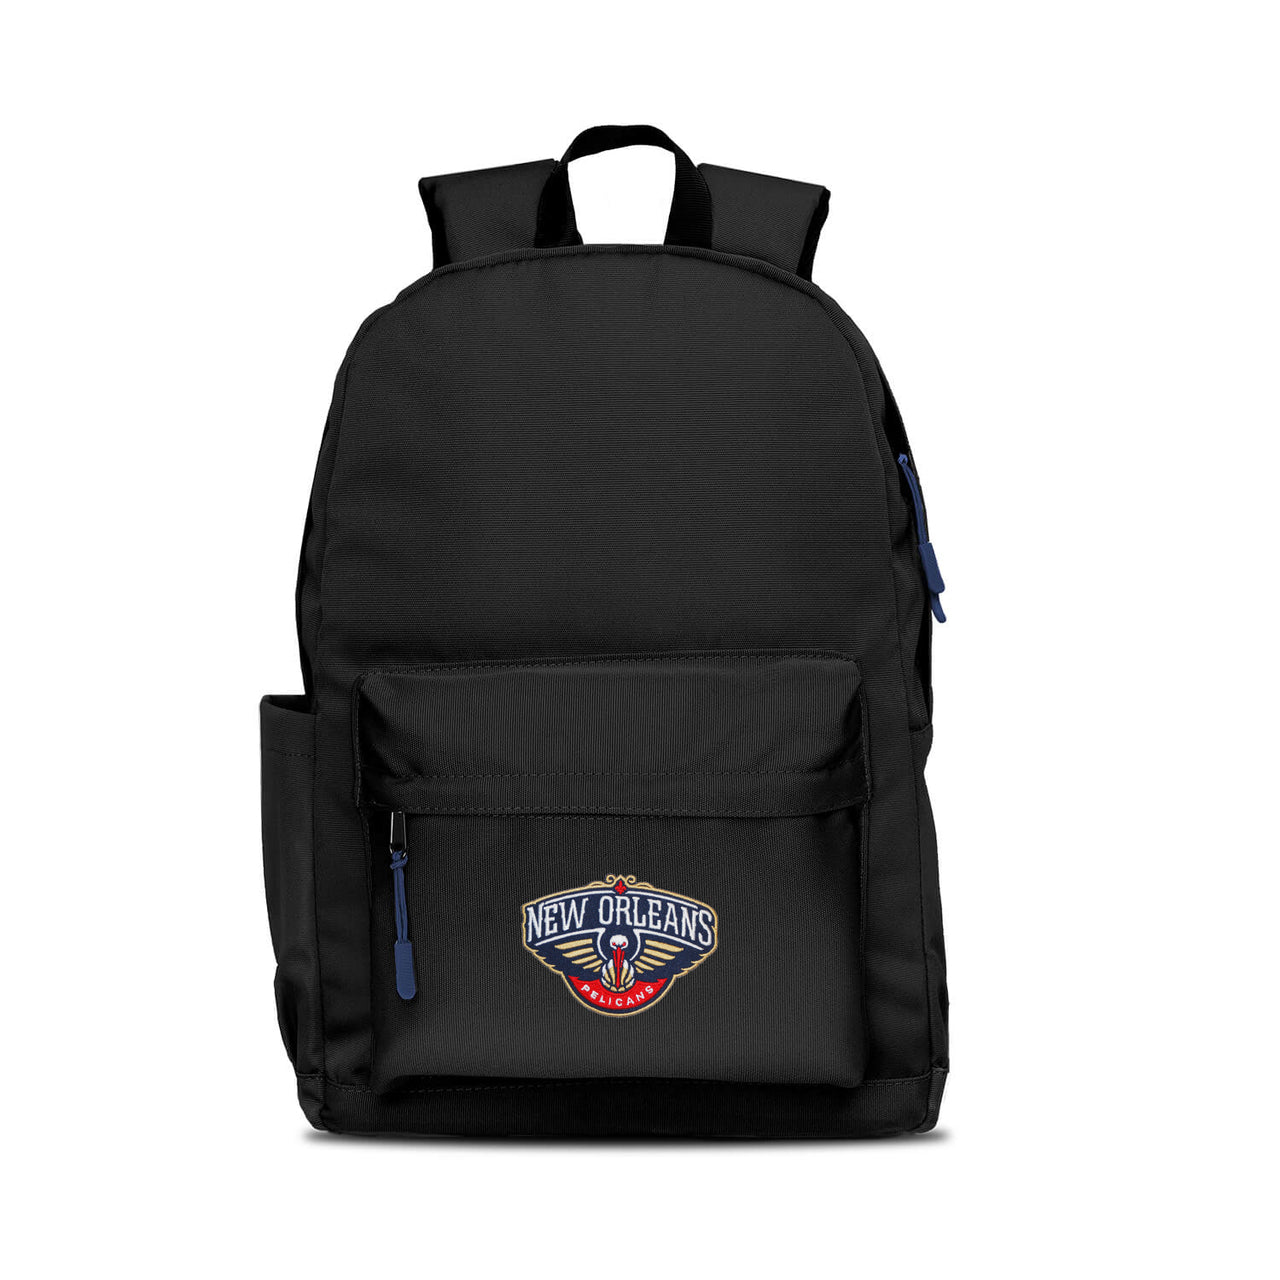 New Orleans Pelicans Campus Laptop Backpack - Black